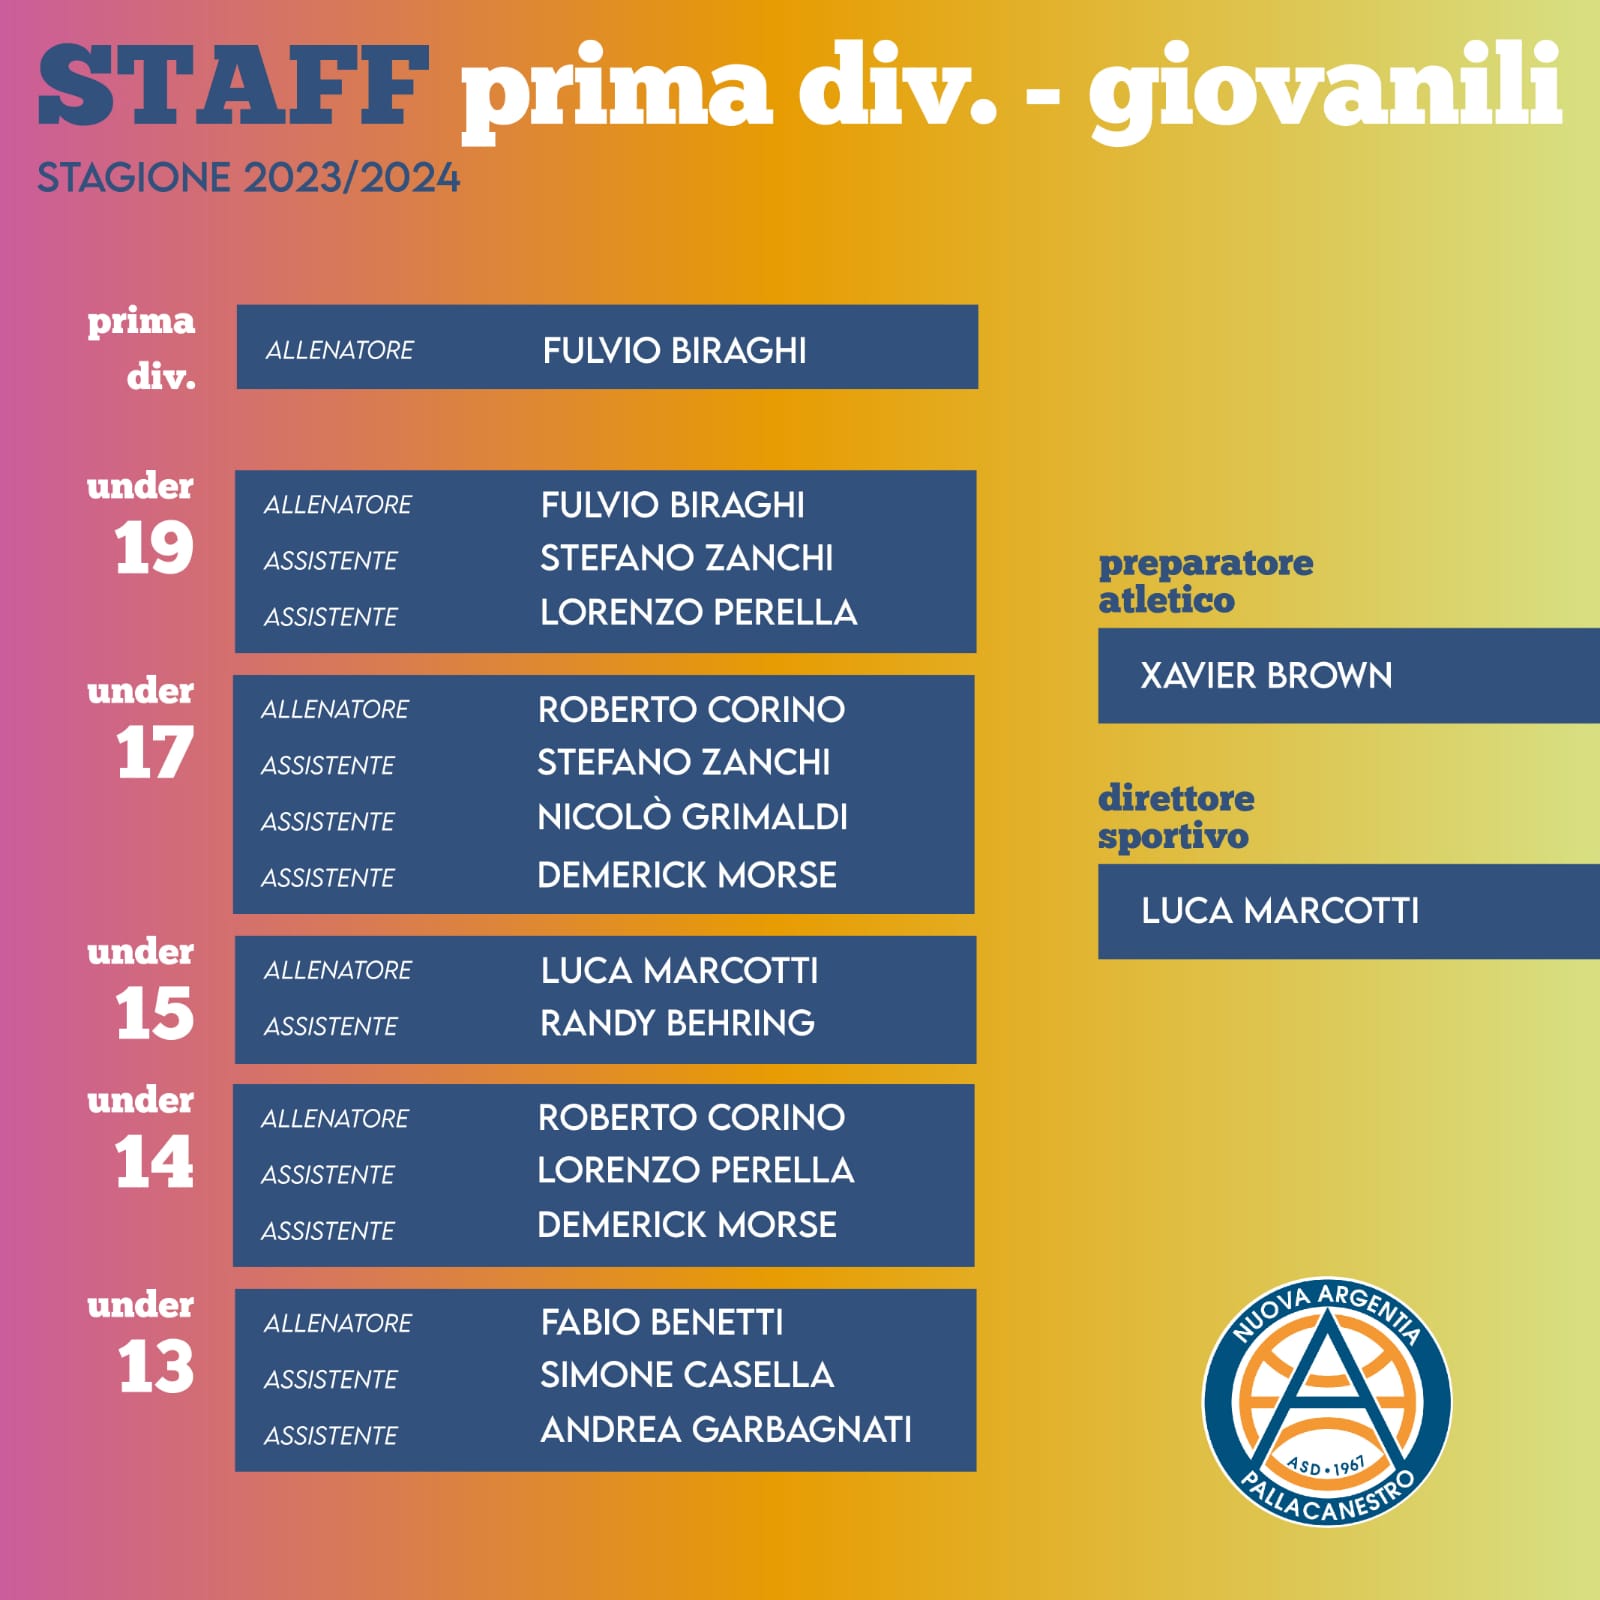 Staff Nuova Argentia Gorgonzola 2023/2024: Staff Giovanili